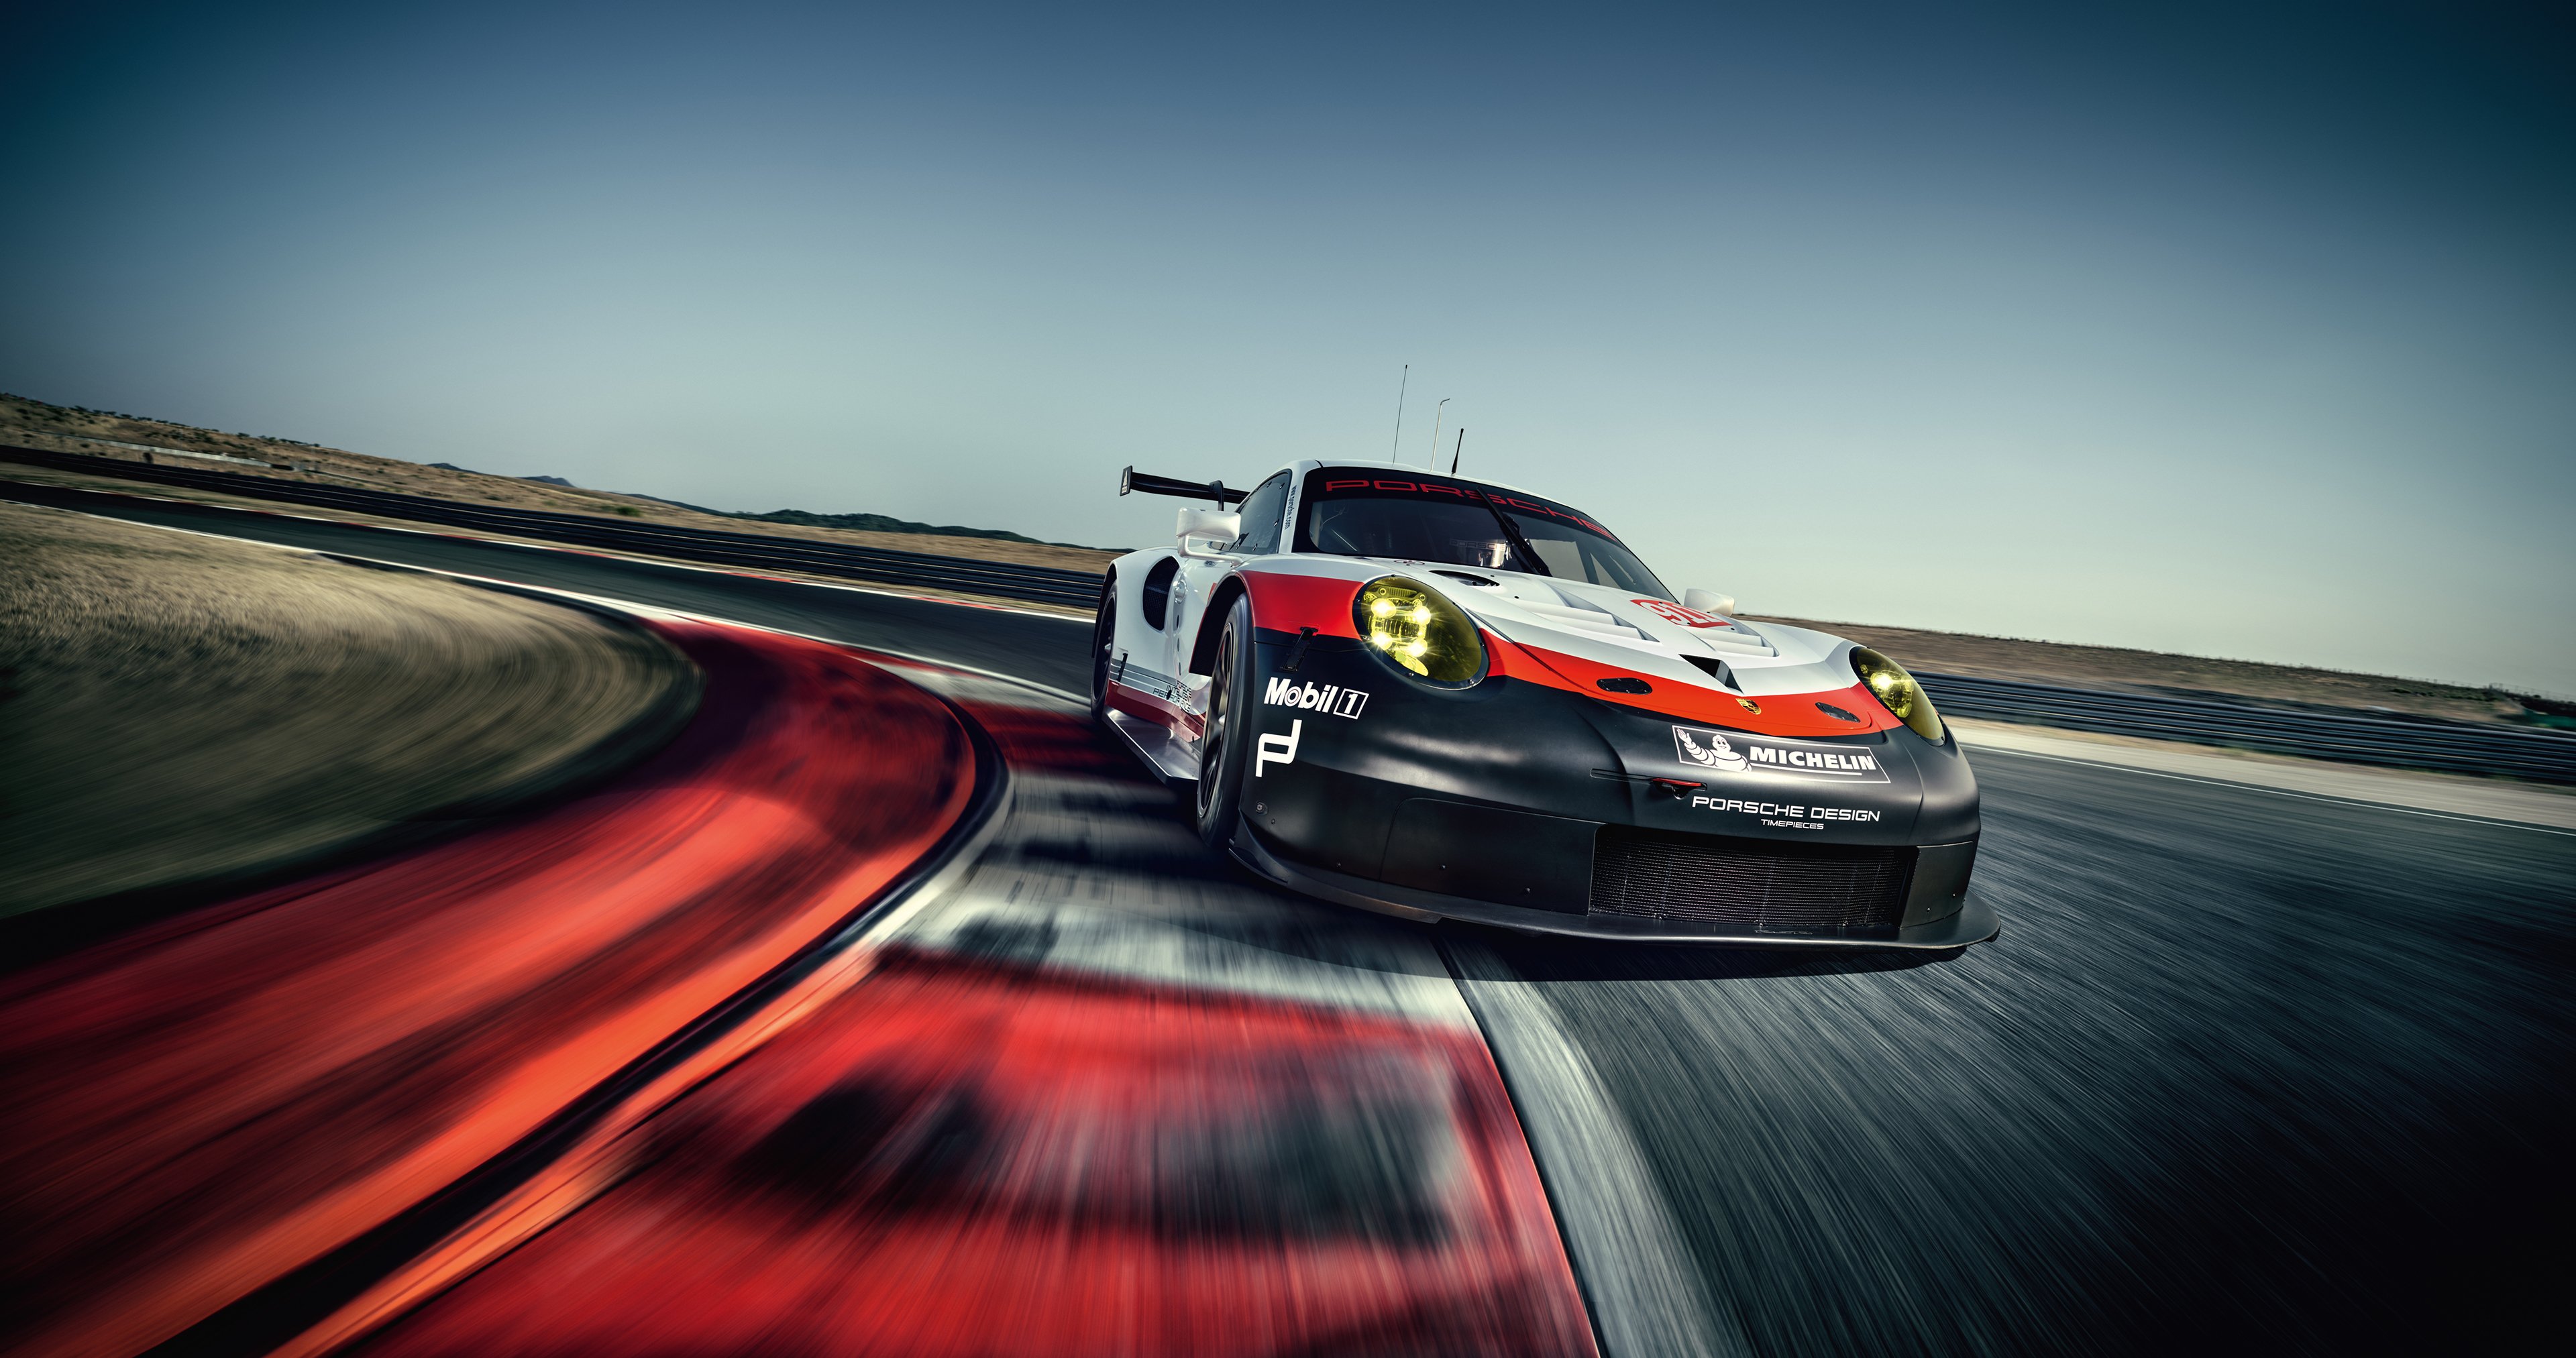 3840x2025 Wallpaper Porsche 911 Rsr 2022 Racing Automotive Cars